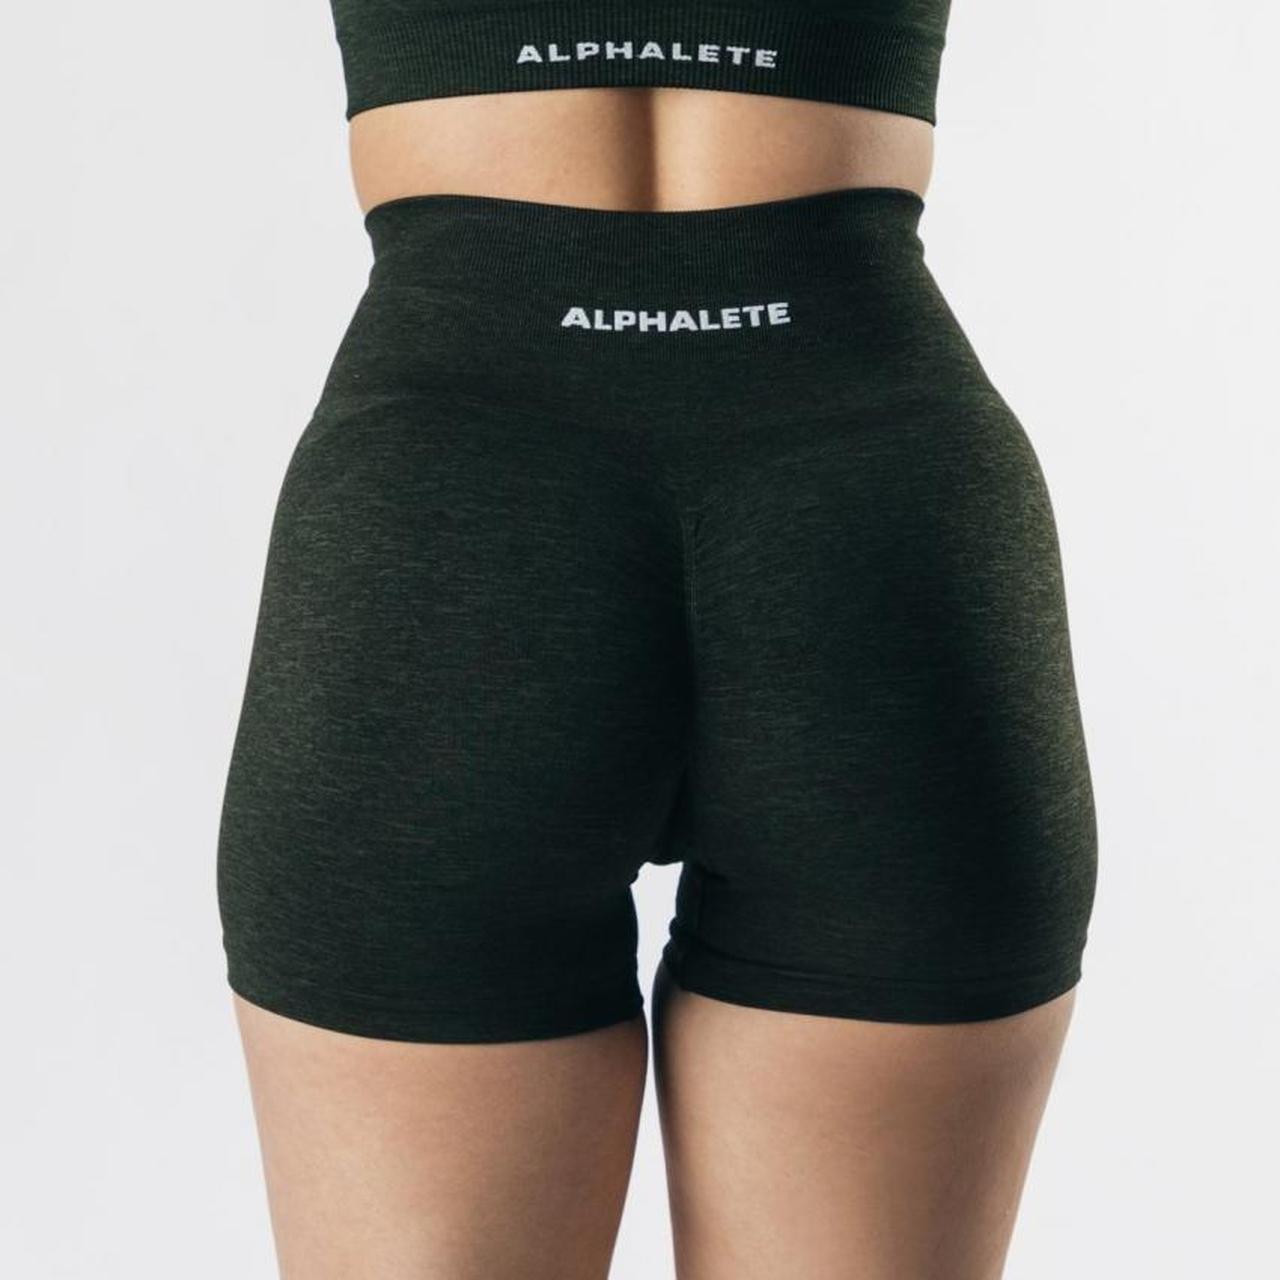 Alphalete Amplify Biker Shorts - Bordeaux - Small/SM - NWOT!